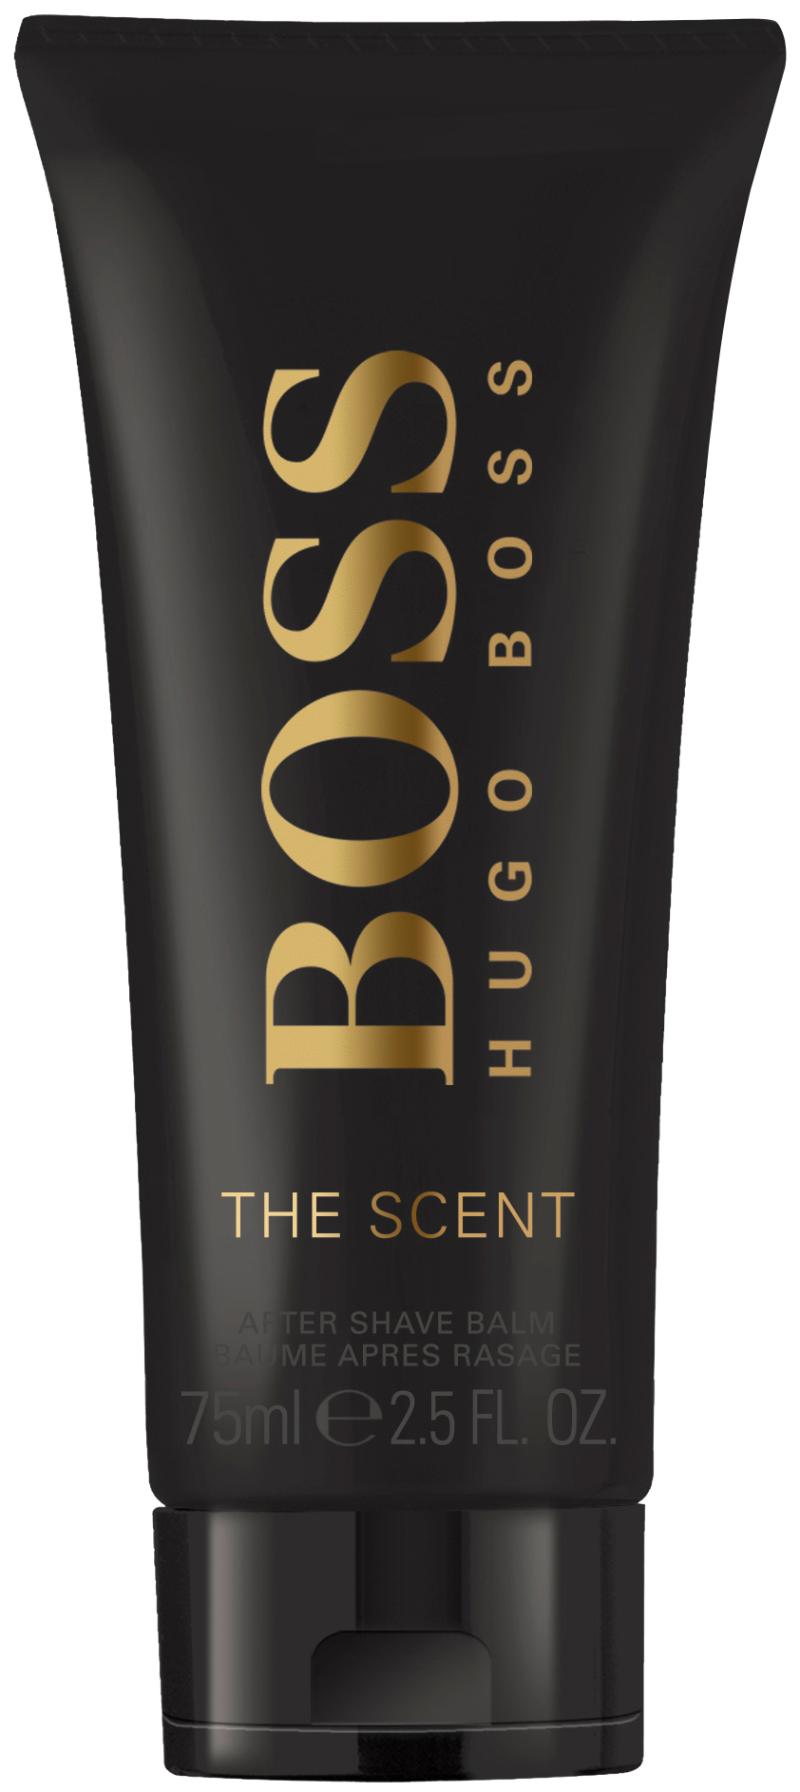 plus orkester akademisk Hugo Boss - Boss The Scent After Shave Balm 75 ml